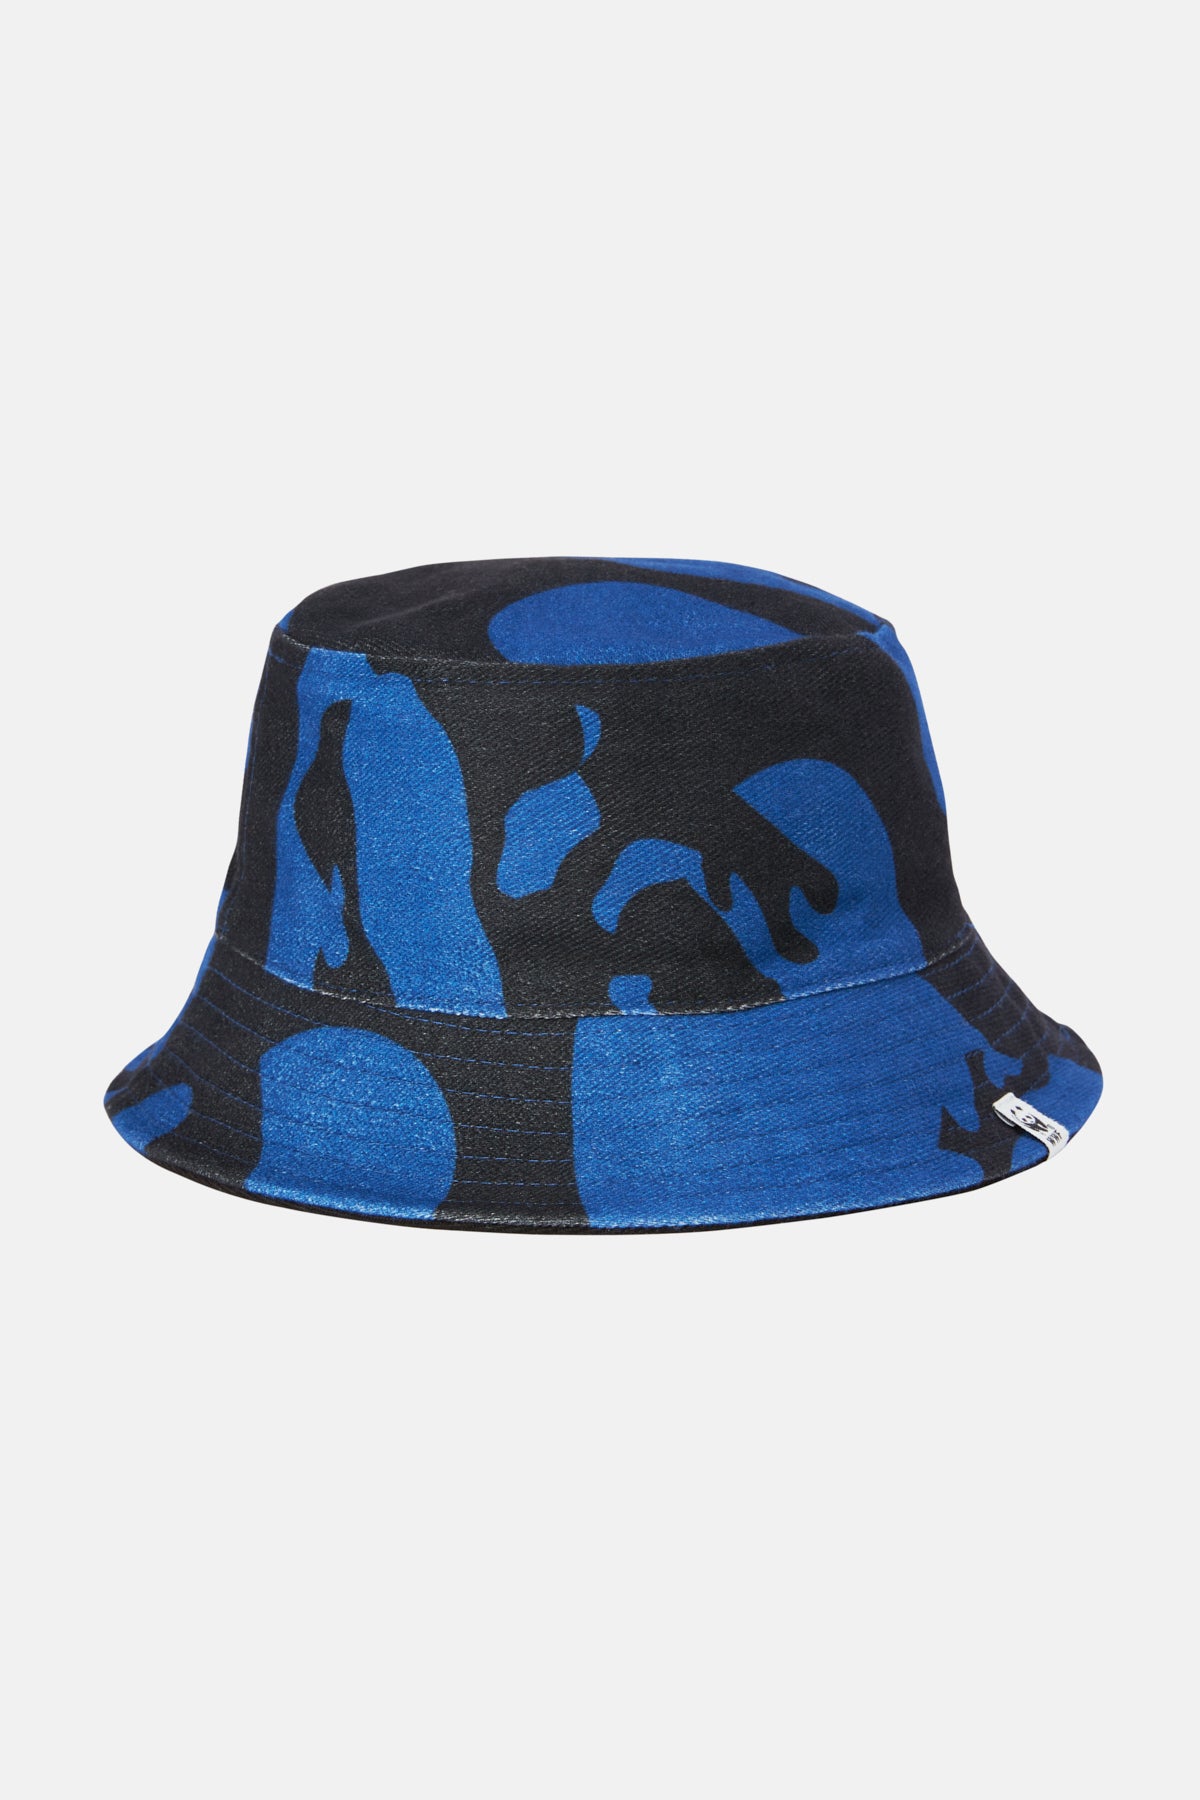 Reflect Studio // Bucket Hat // Camouflage // Schwarz-Blau